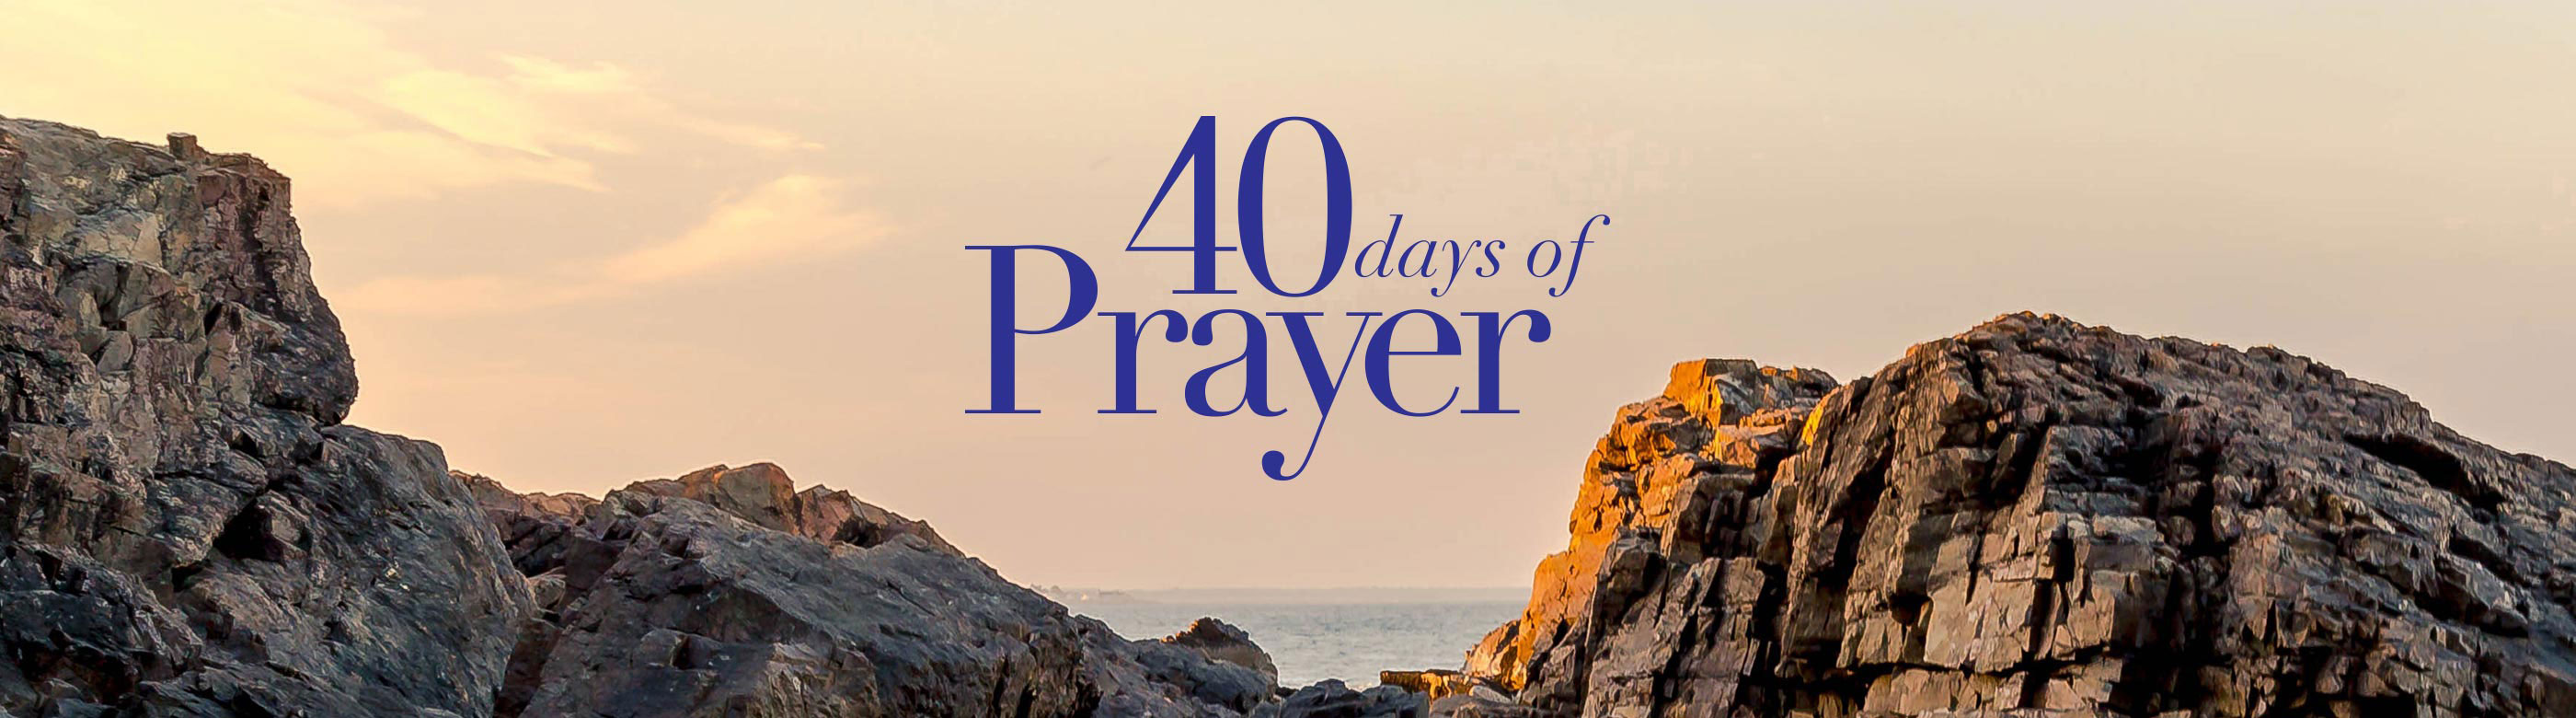 40 Days of Prayer Church Sermon Series Ideas